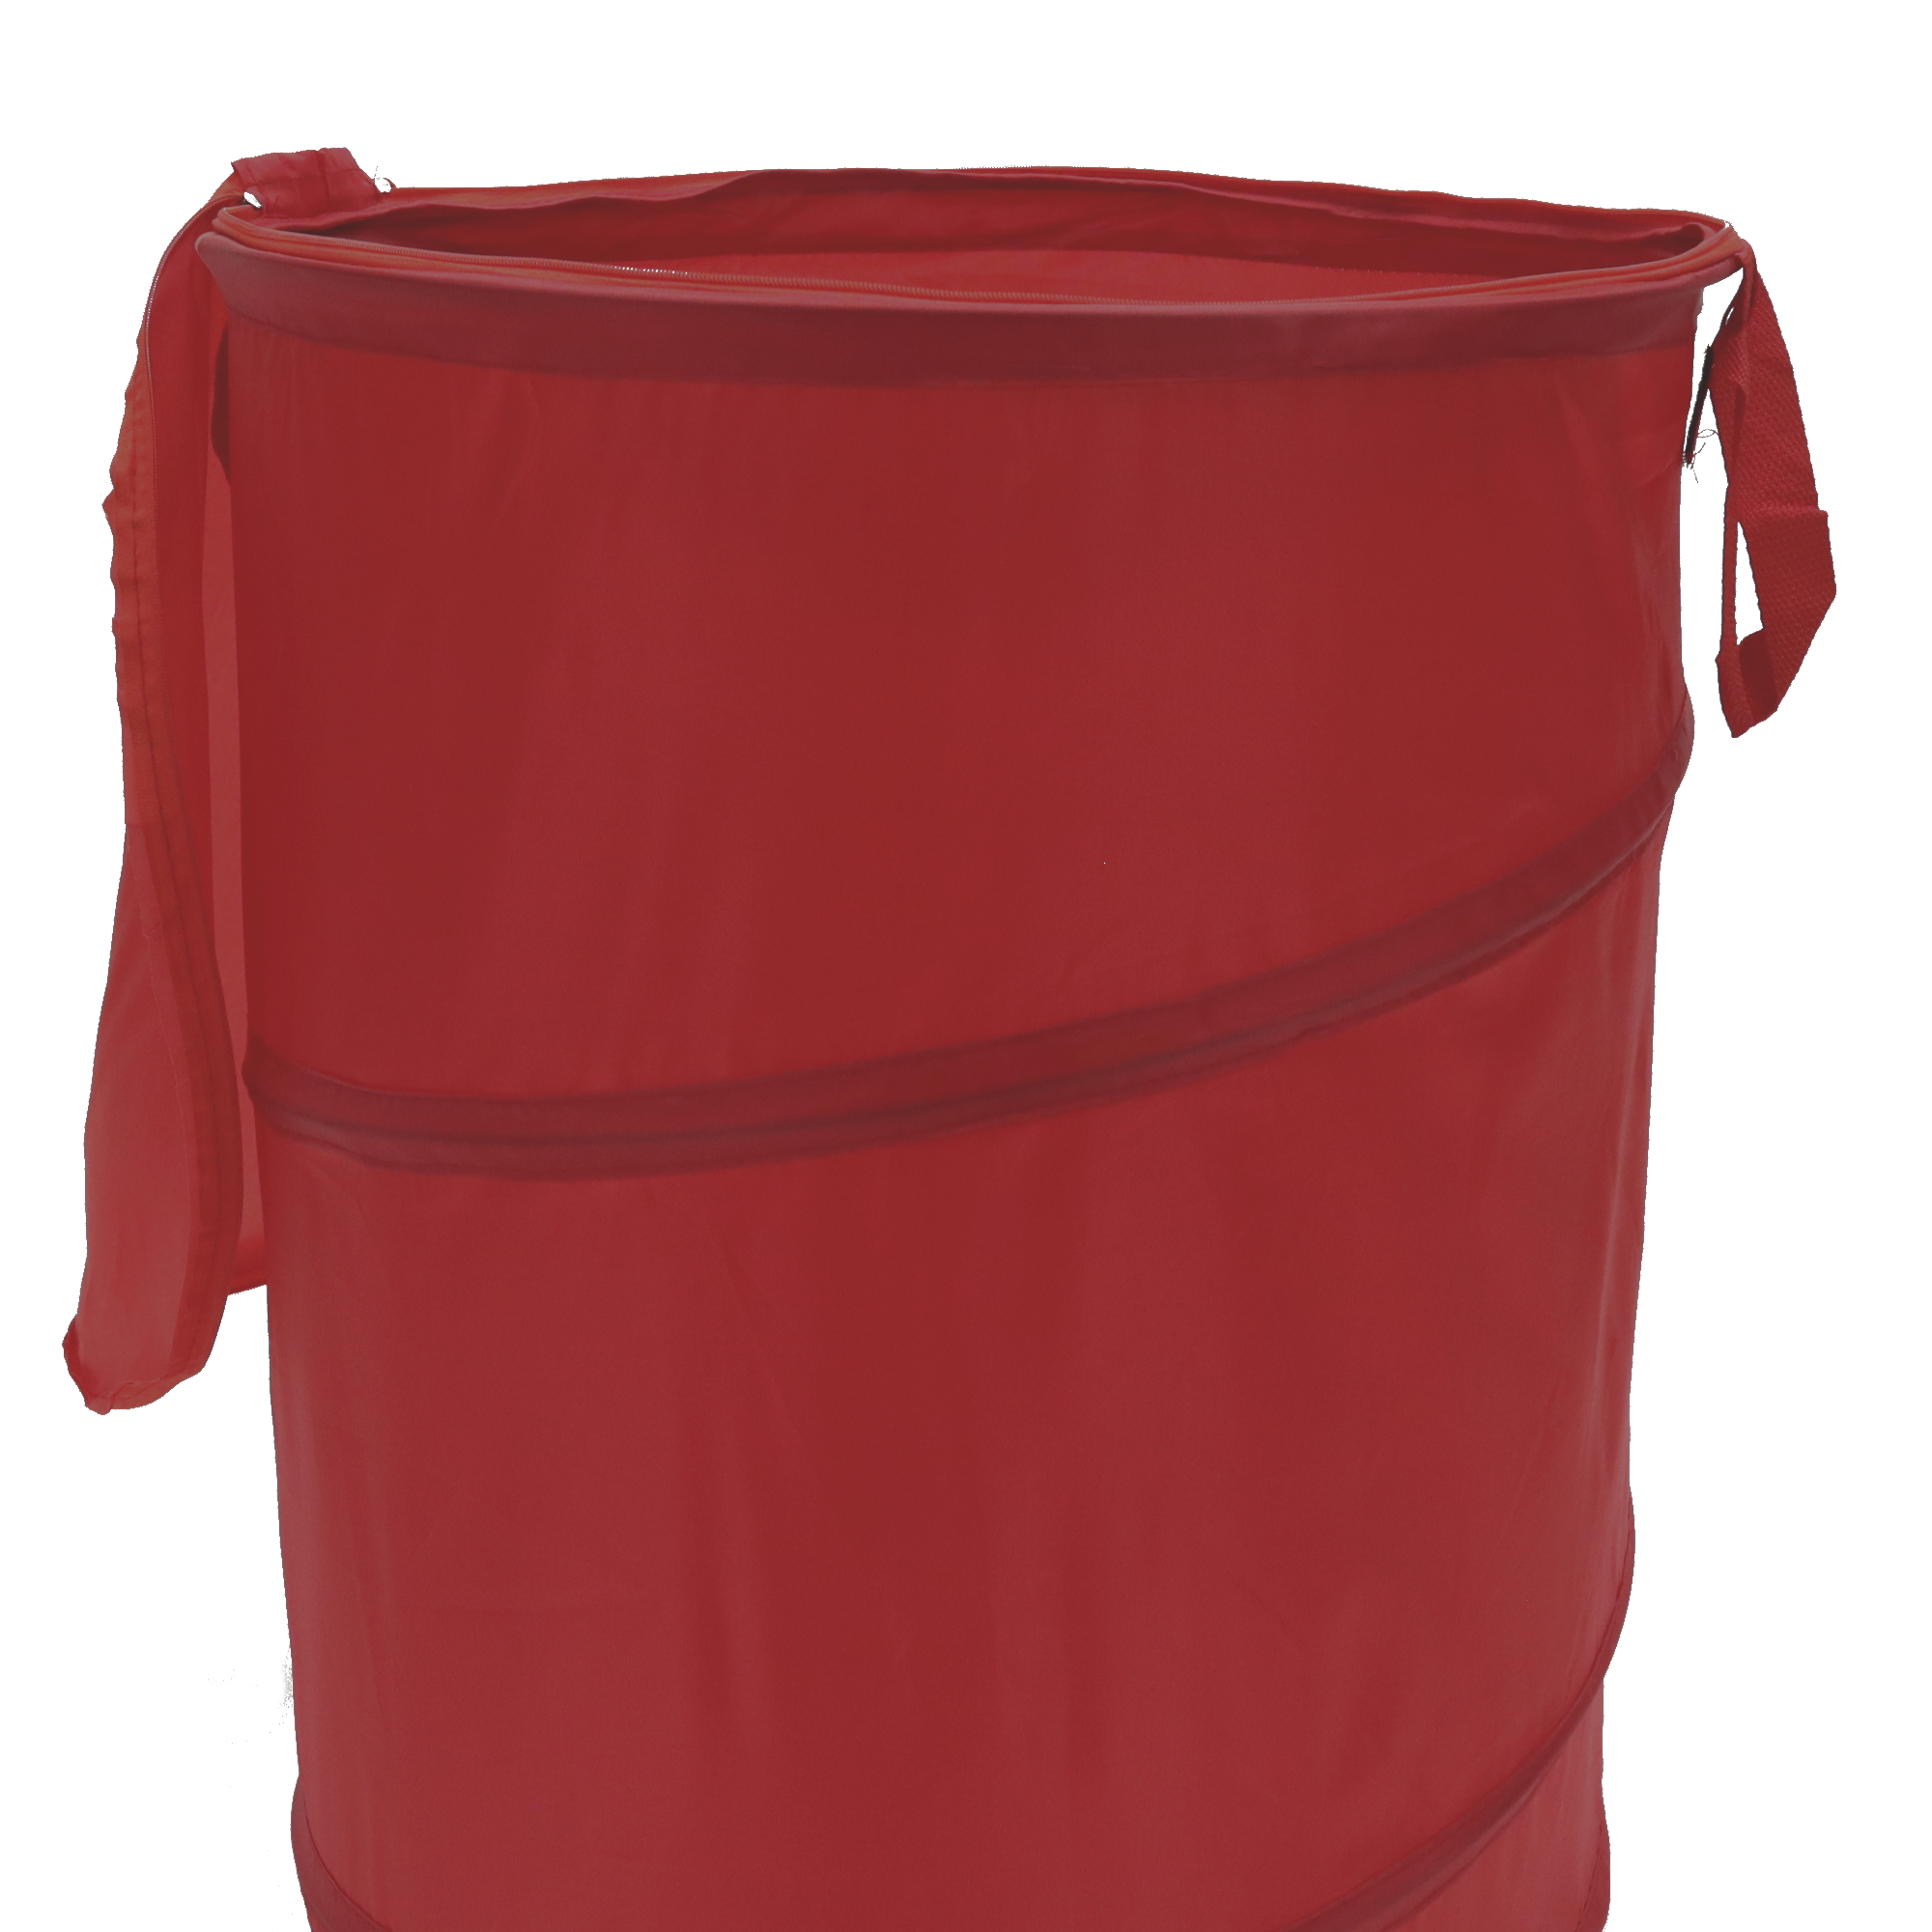 The Original Bongo Bag Pop-Up Hamper, Red - image 2 of 4